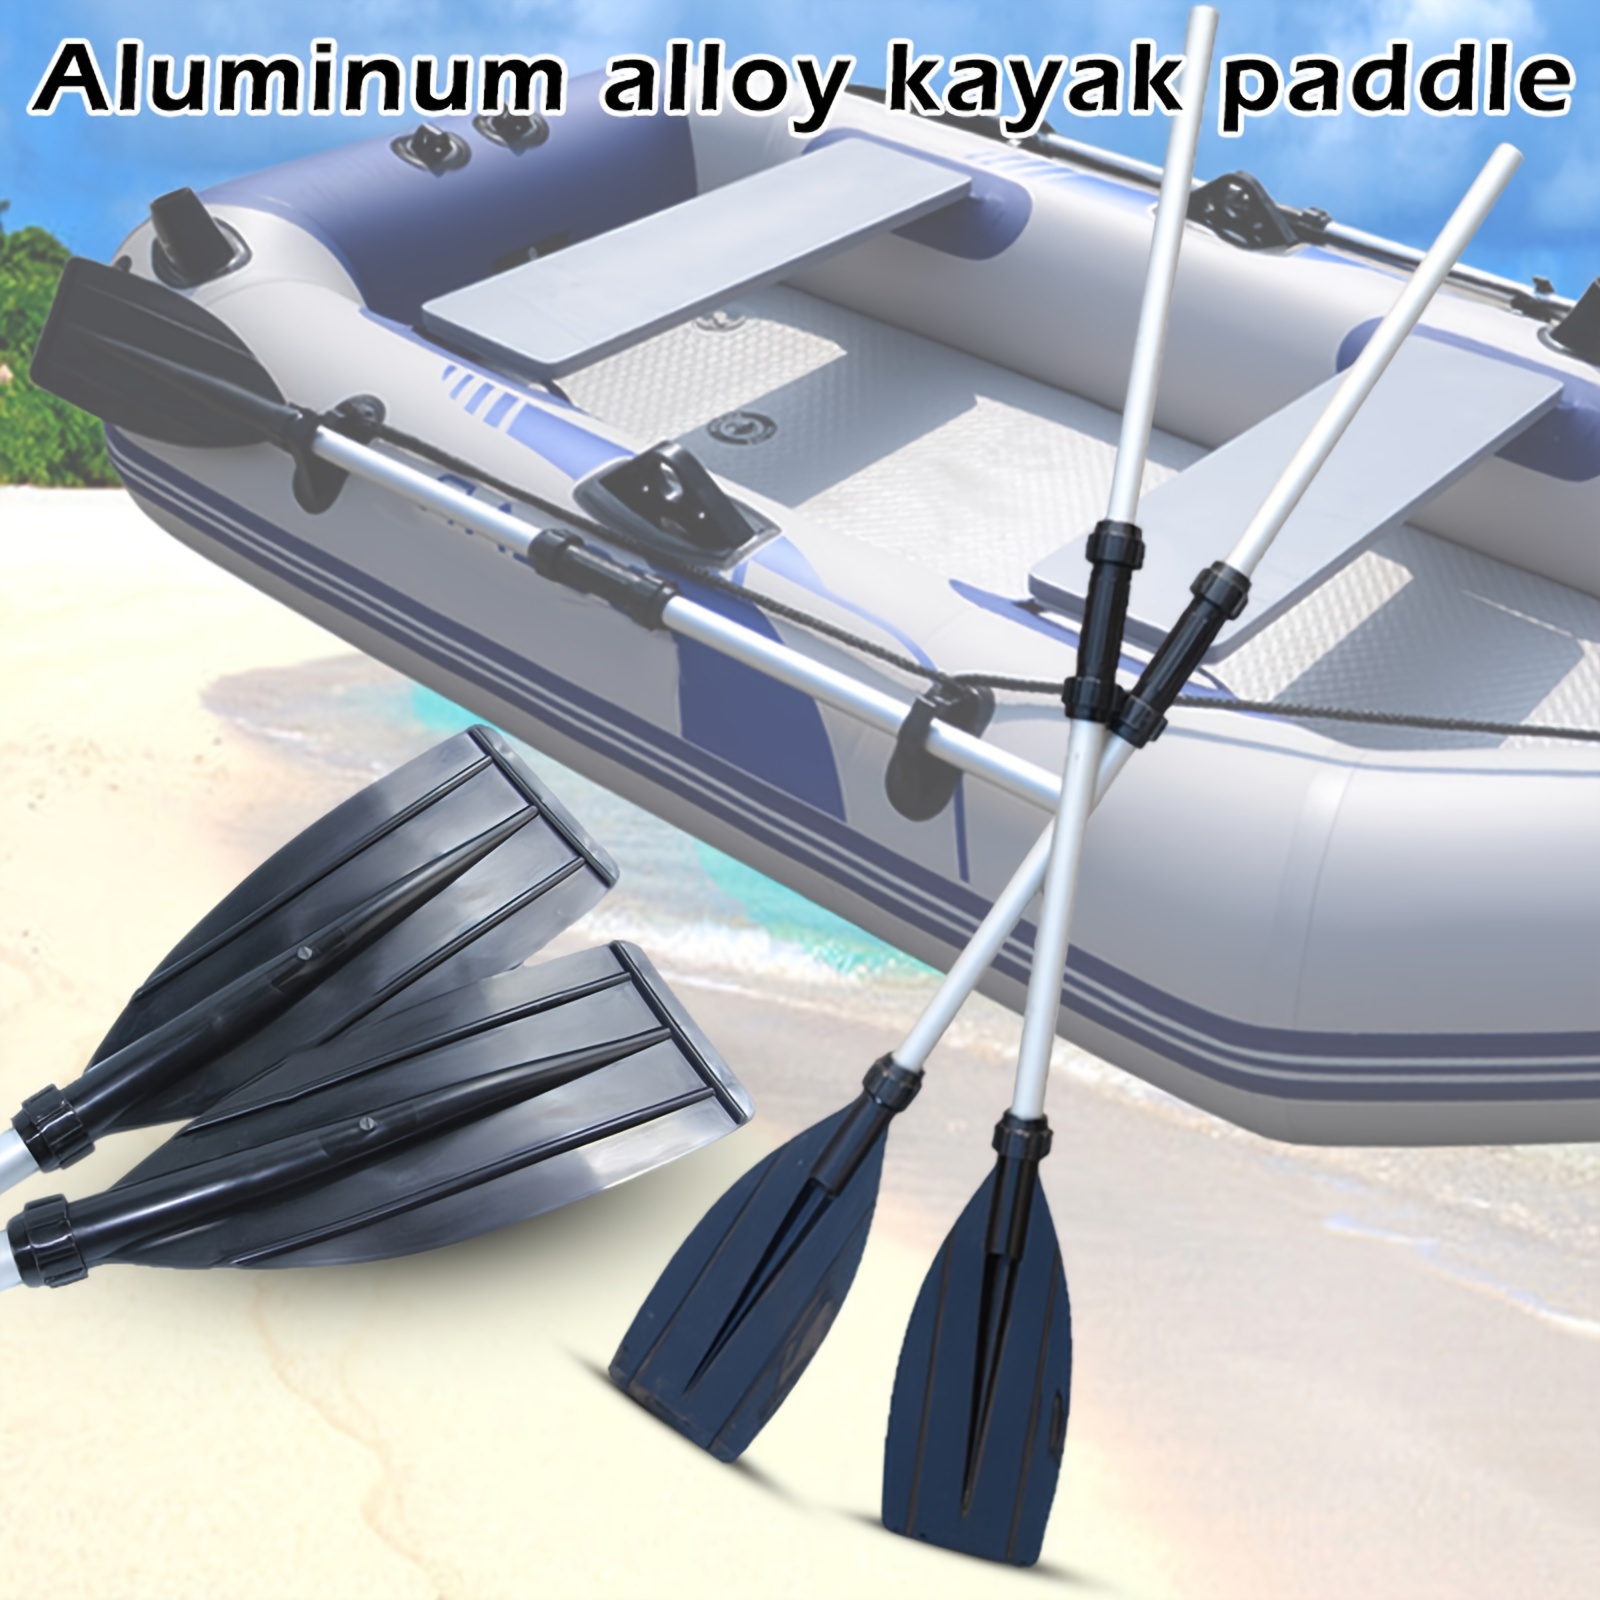 

2pcs Telescoping Paddle, Aluminum Alloy Paddles, Round Grip Boat Kayak Raft Mini Telescopic Paddle